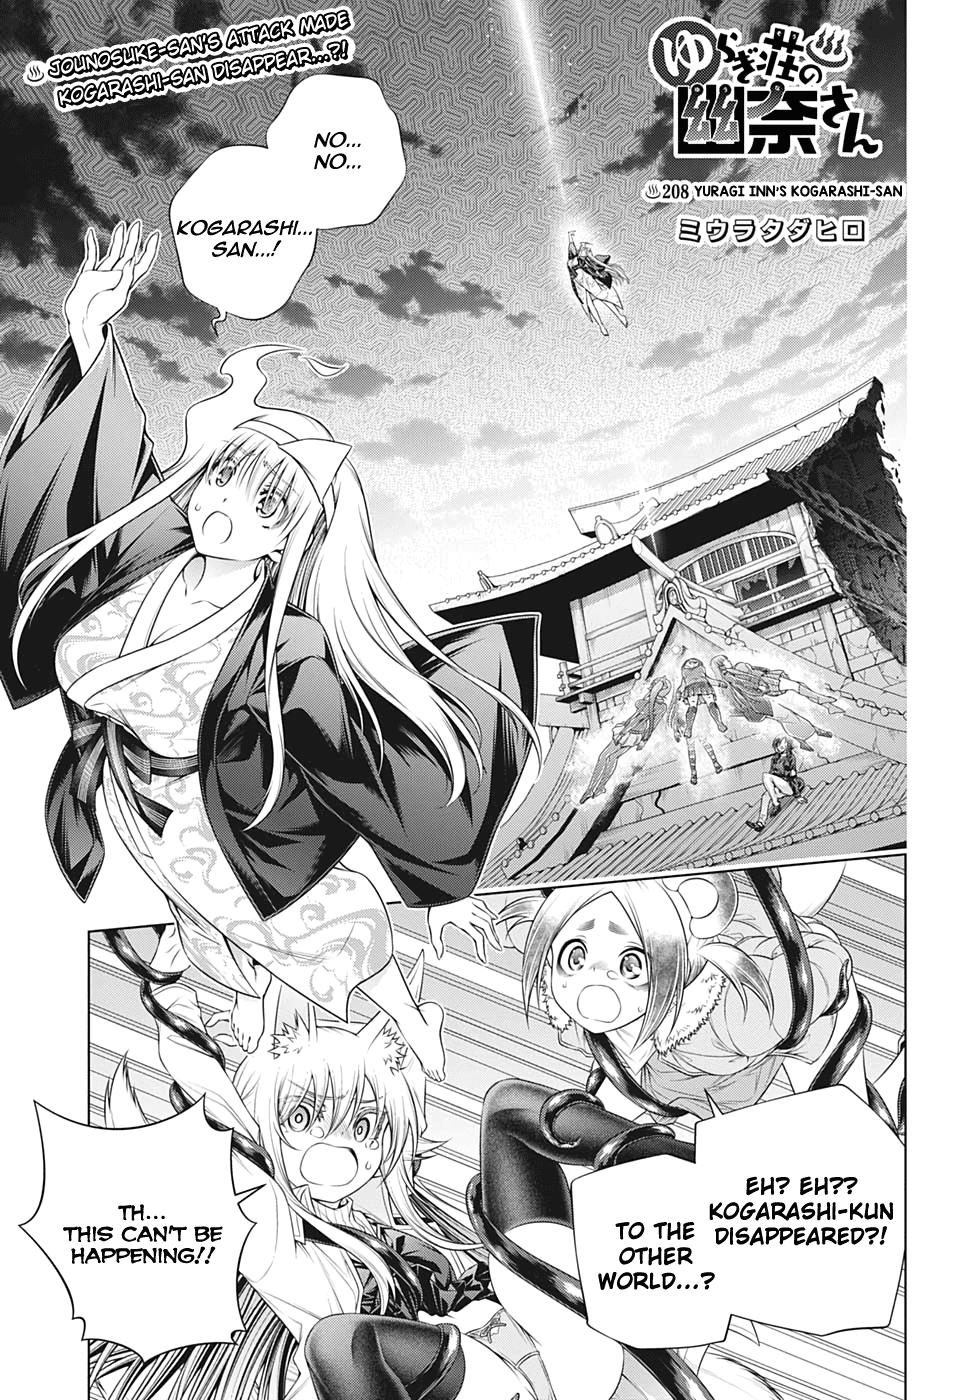 Read Yuragi-Sou No Yuuna-San Chapter 44 on Mangakakalot